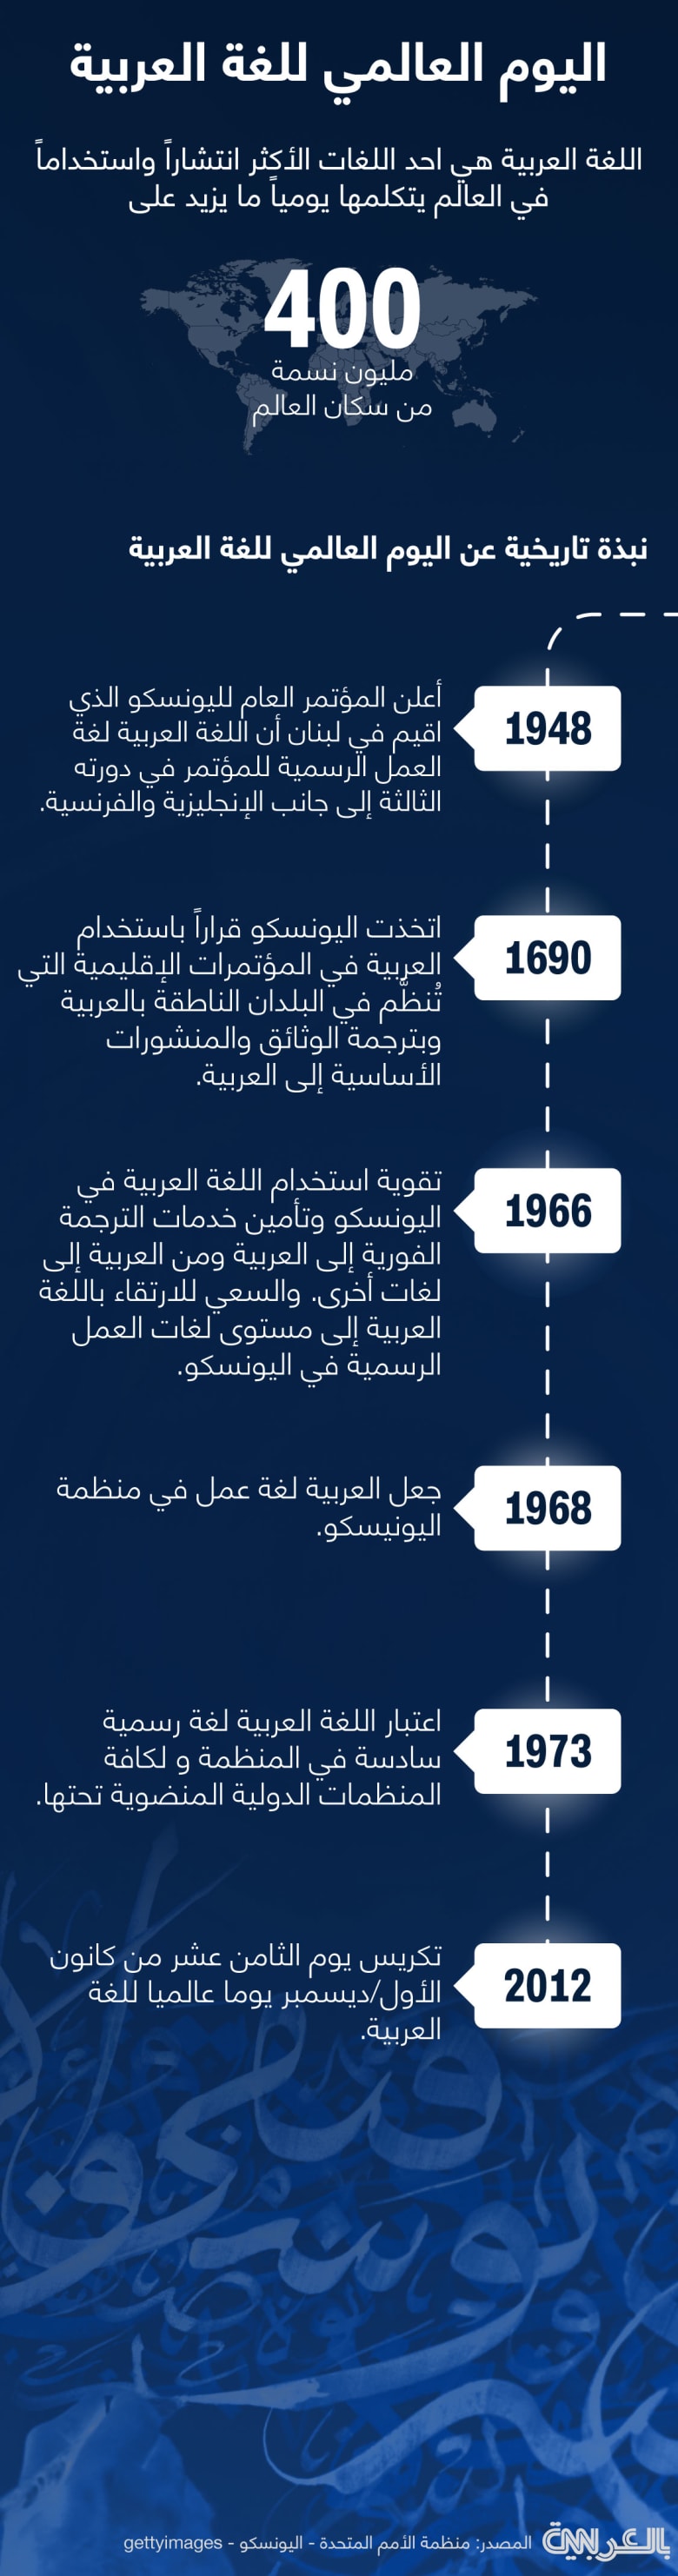  Arabic-language-day-timeline